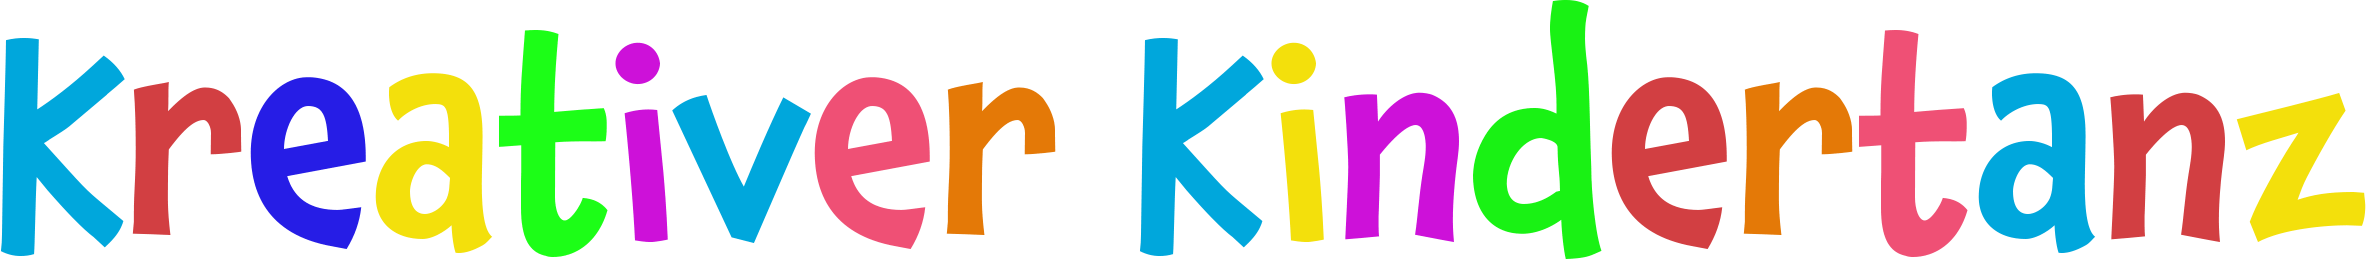 Kreativer Kindertanz Logo